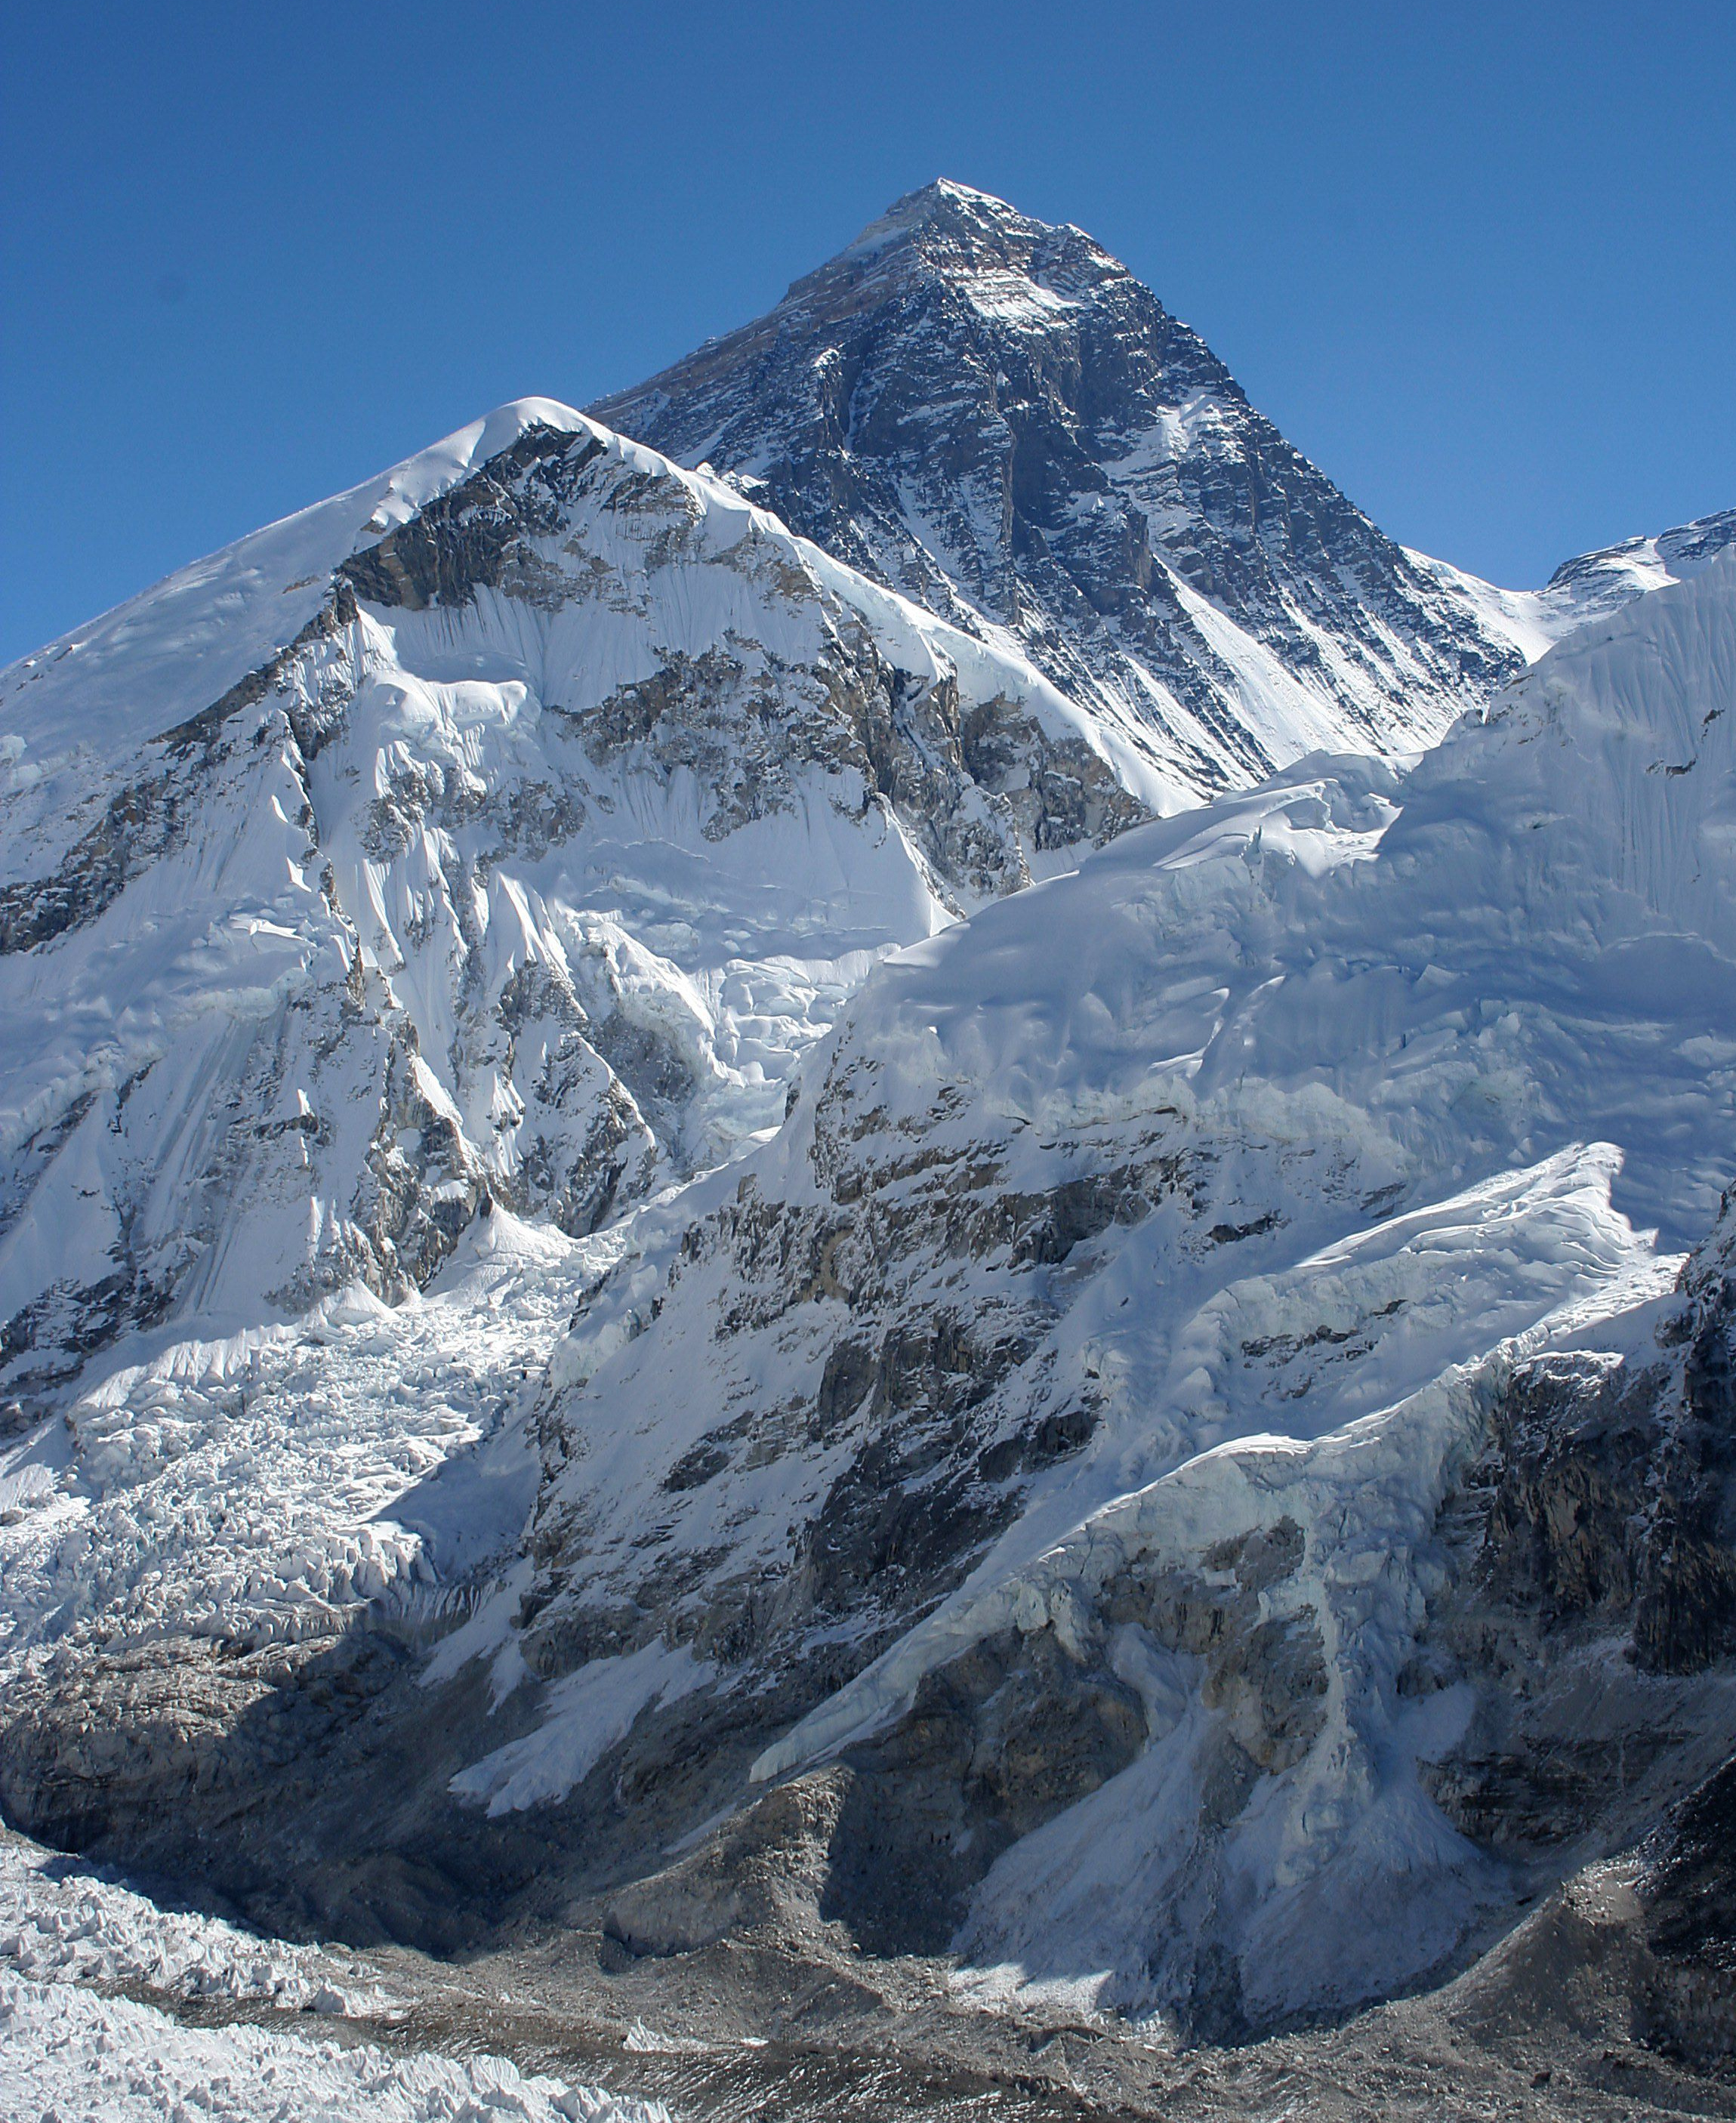 Mount Everest from Kalapatthar.